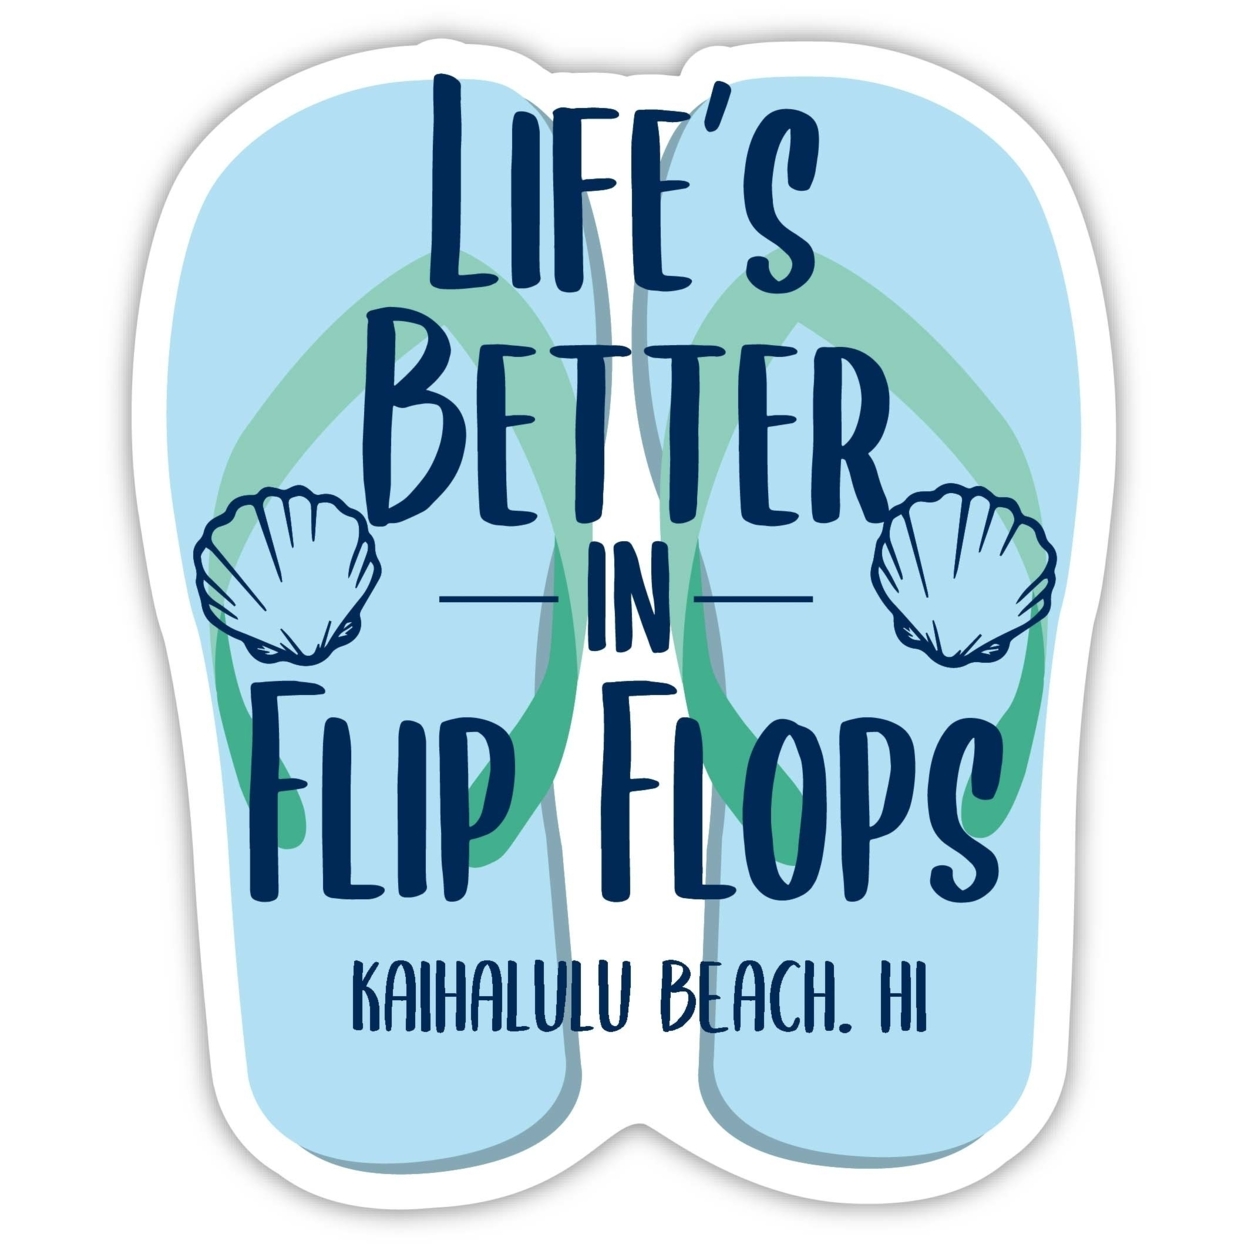 Kaihalulu Beach Hawaii Souvenir 4 Inch Vinyl Decal Sticker Flip Flop Design